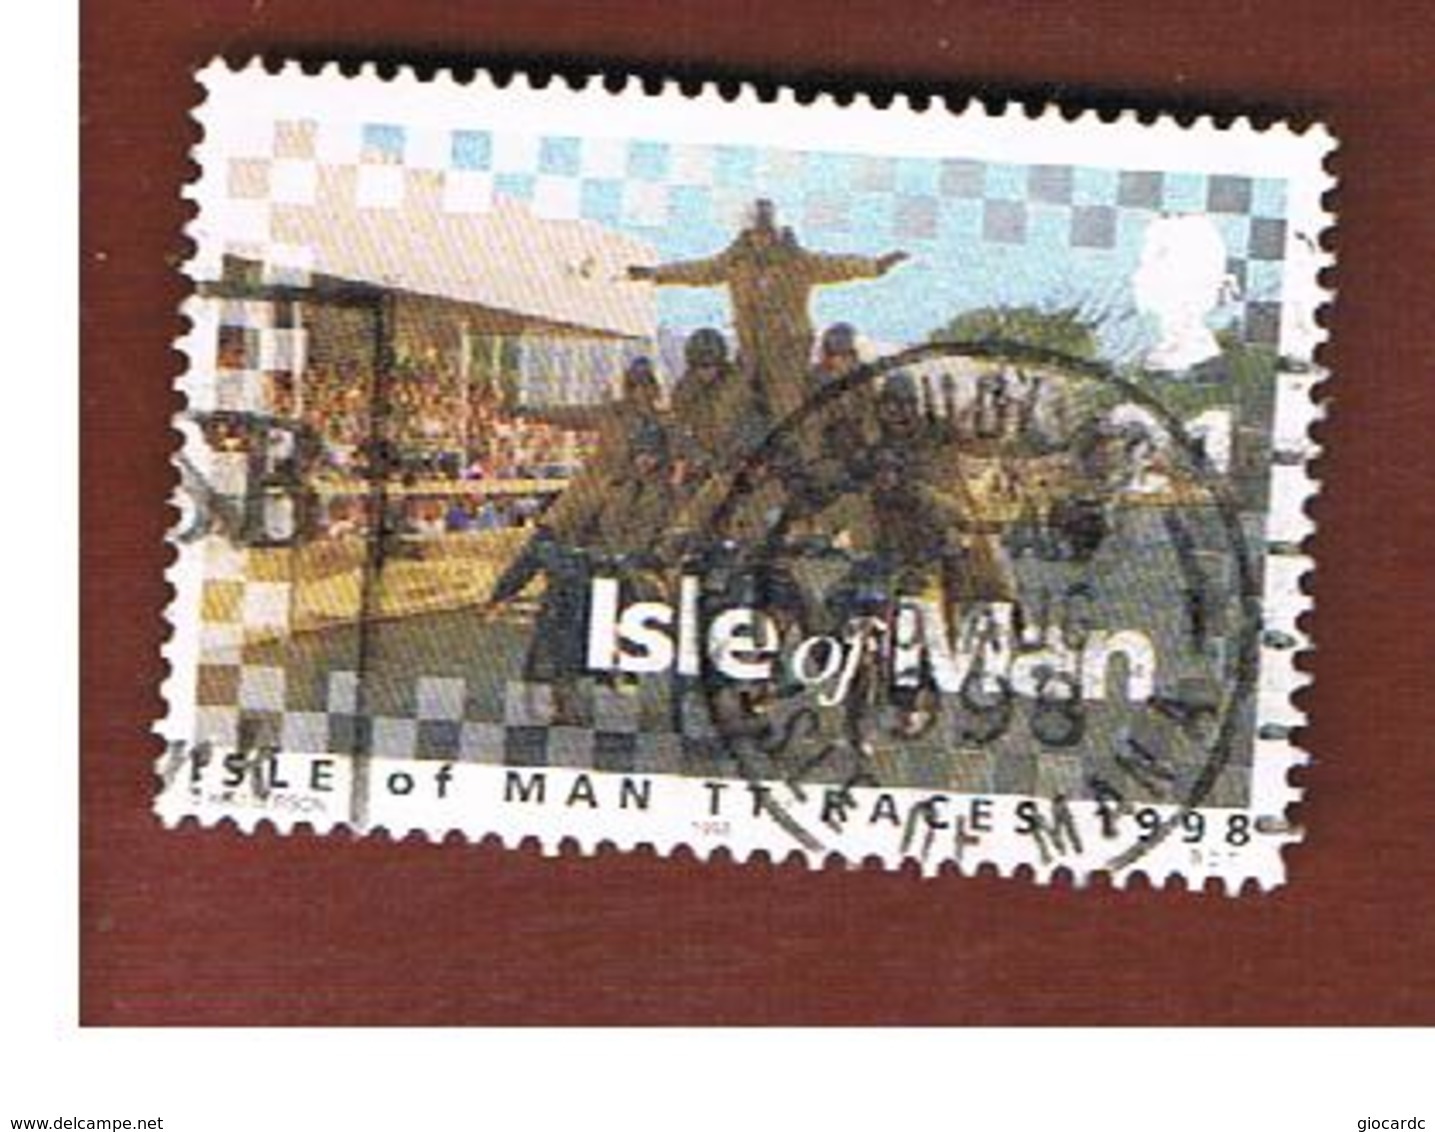 ISOLA DI MAN (ISLE OF MAN)  -  SG 808  -   1998  TOURIST TROPHY TEAM  -   USED - Isle Of Man